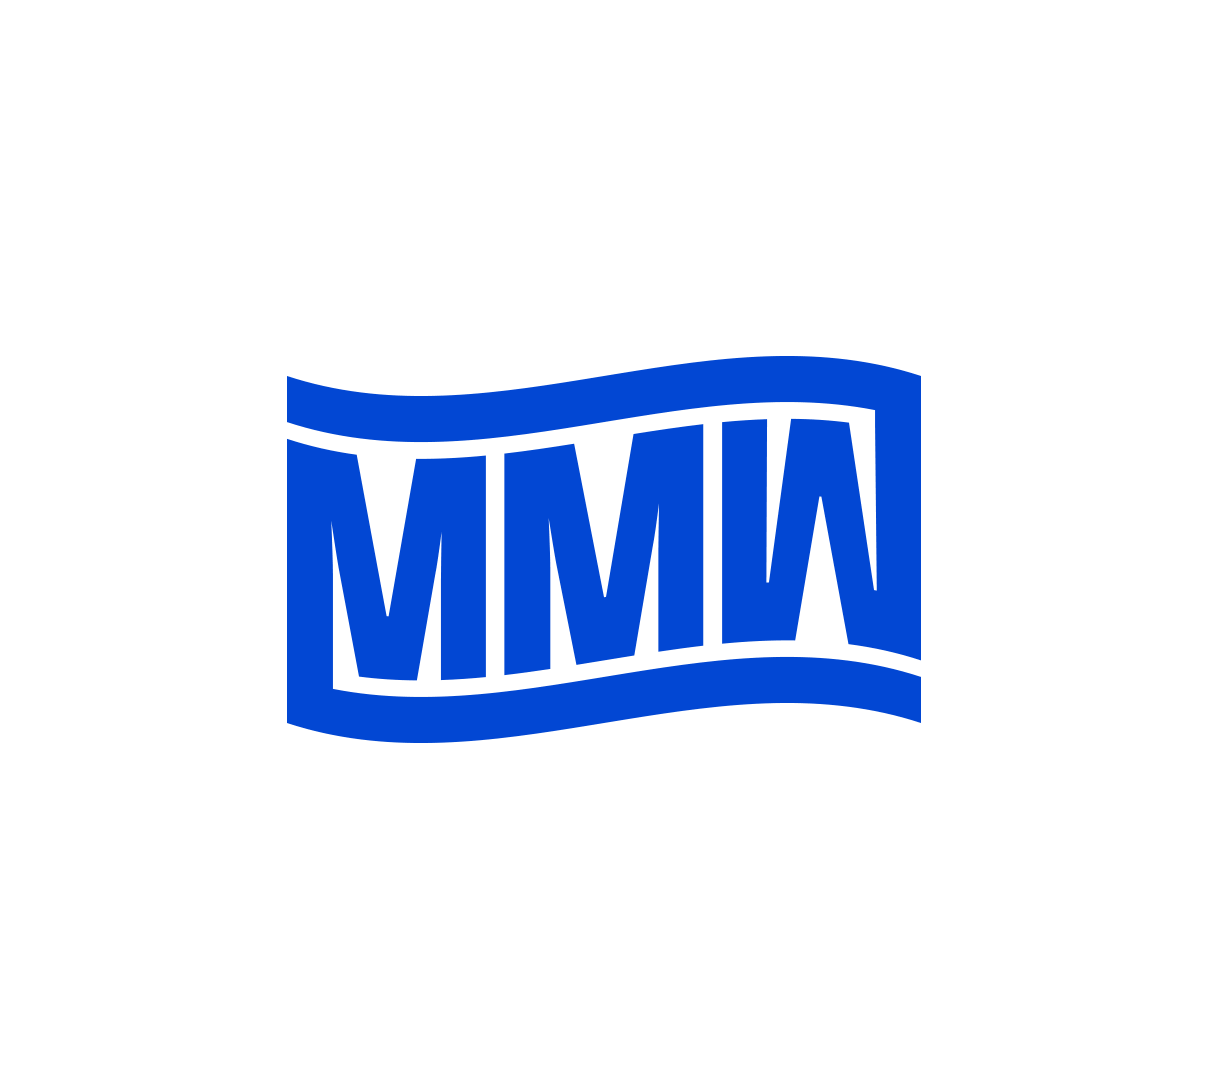 MMW monogram logo